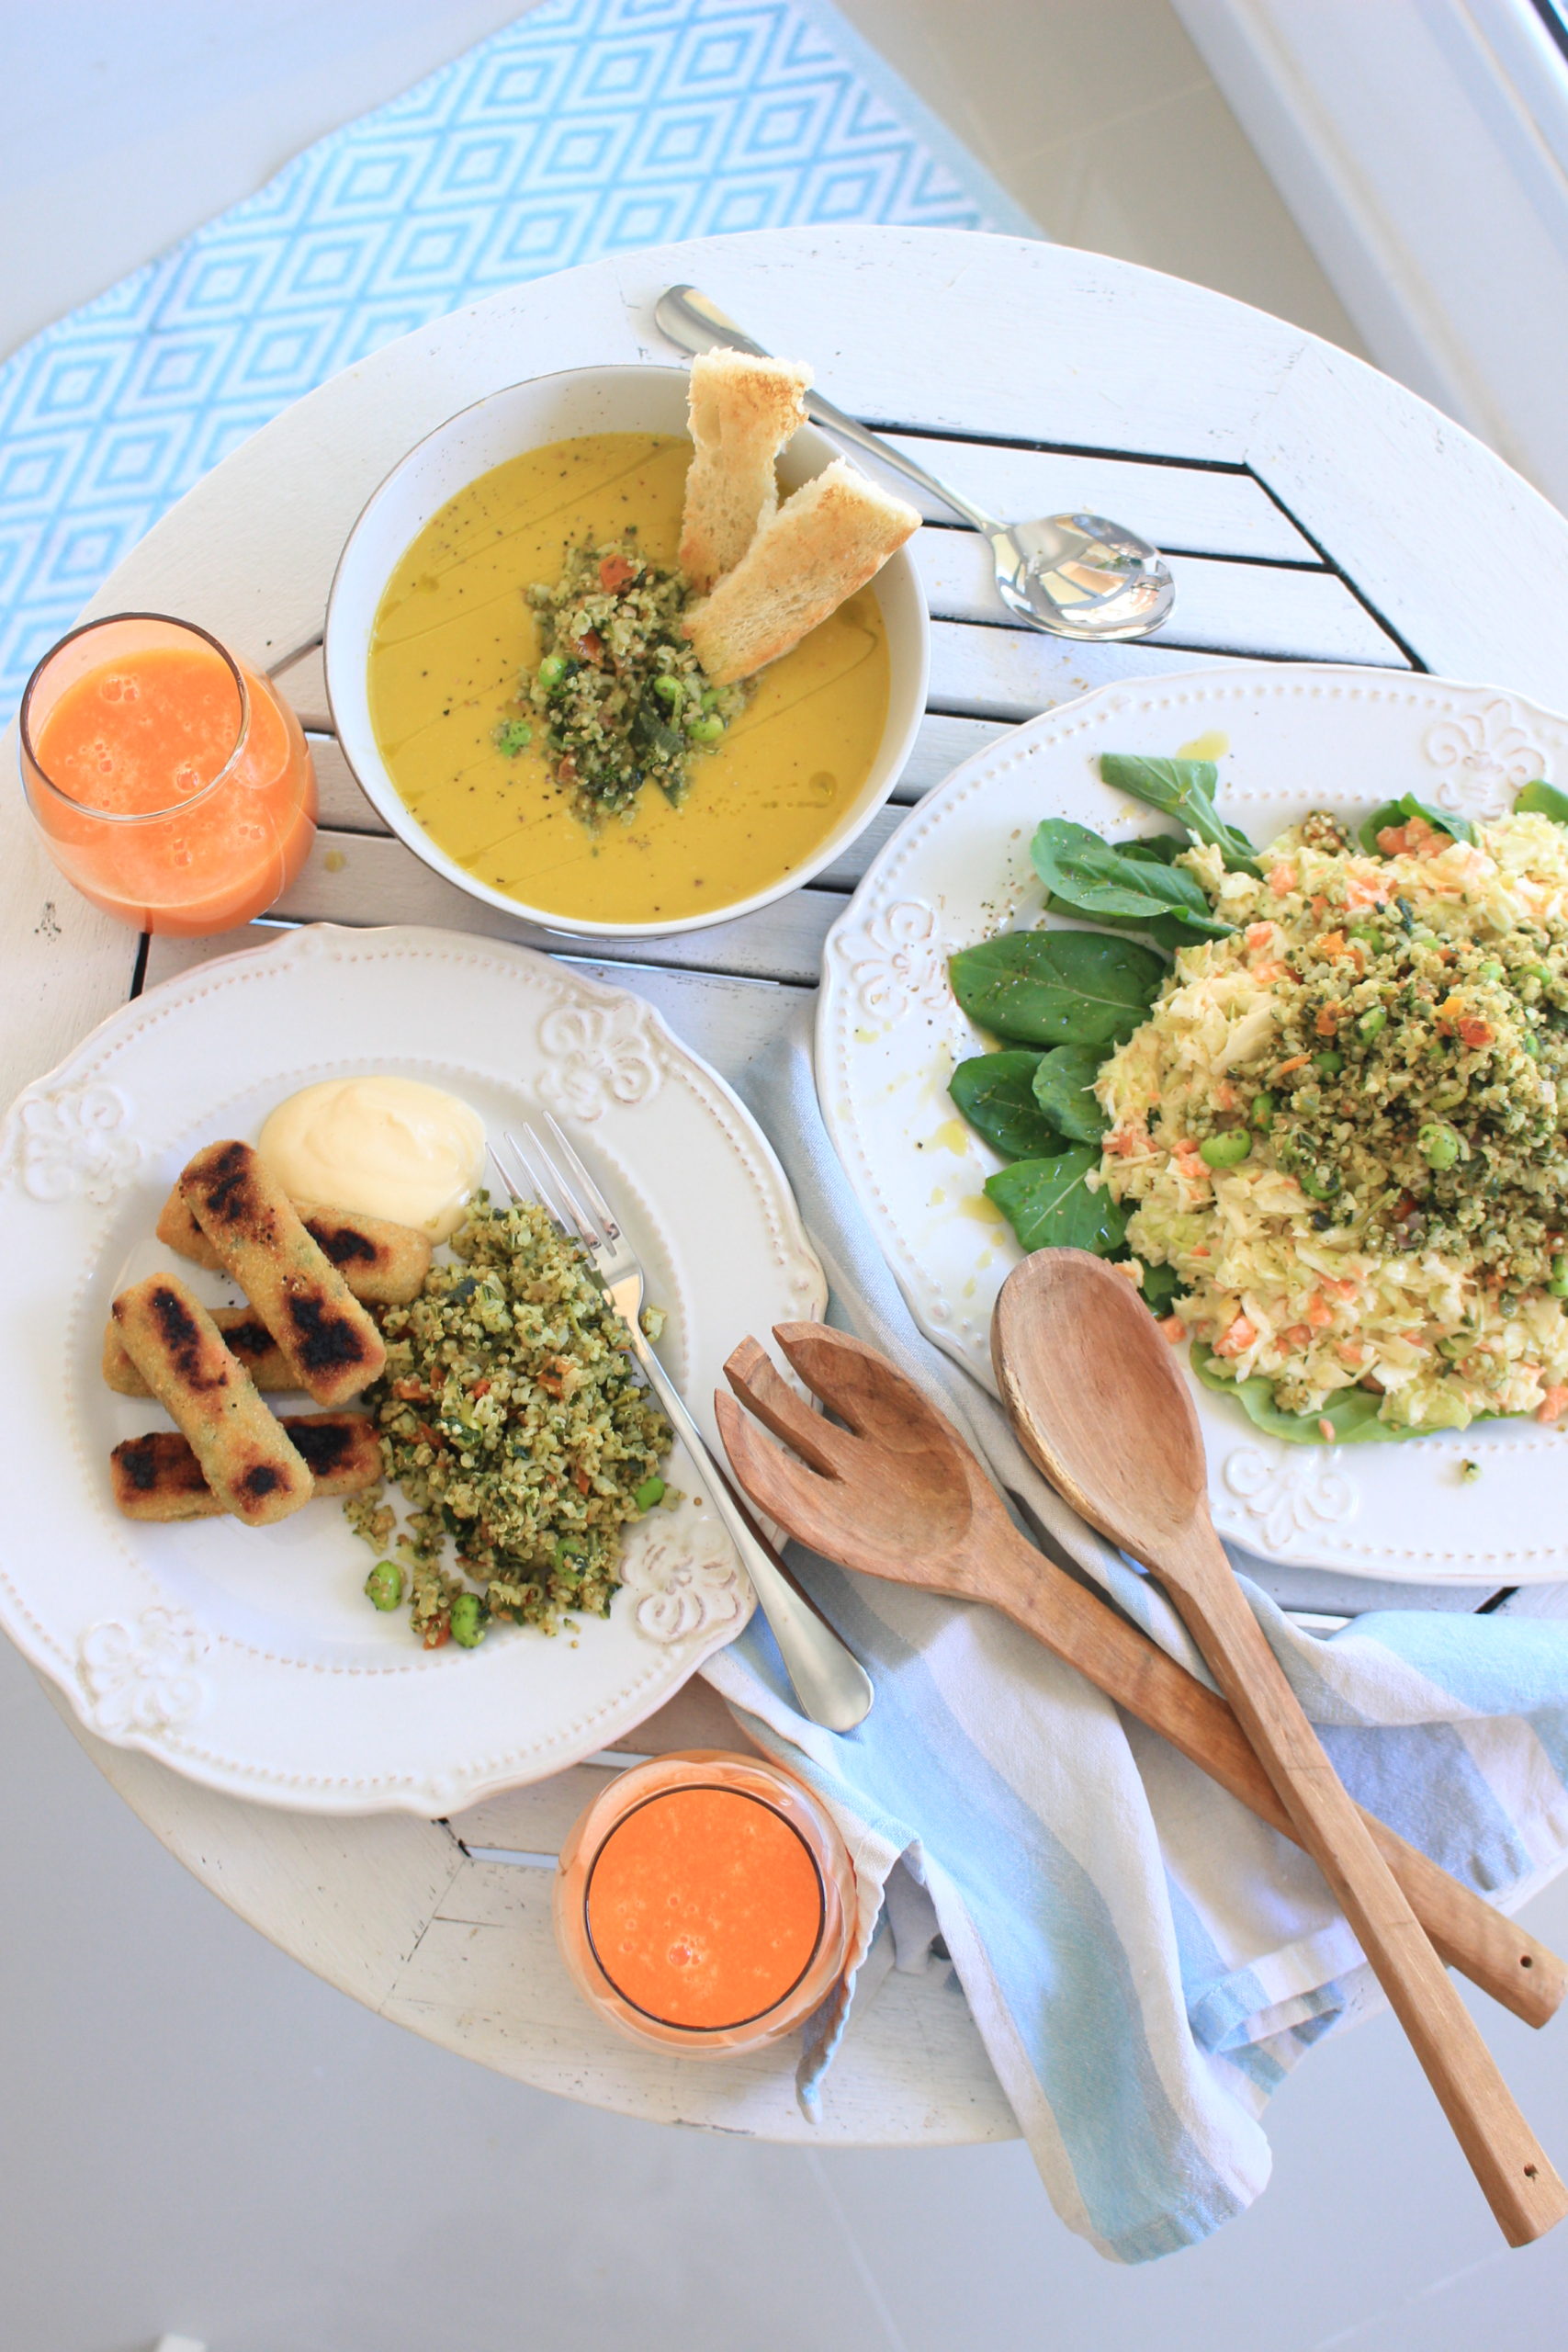 Un mix de quinoa y vegetales  – infinitas posibilidades!